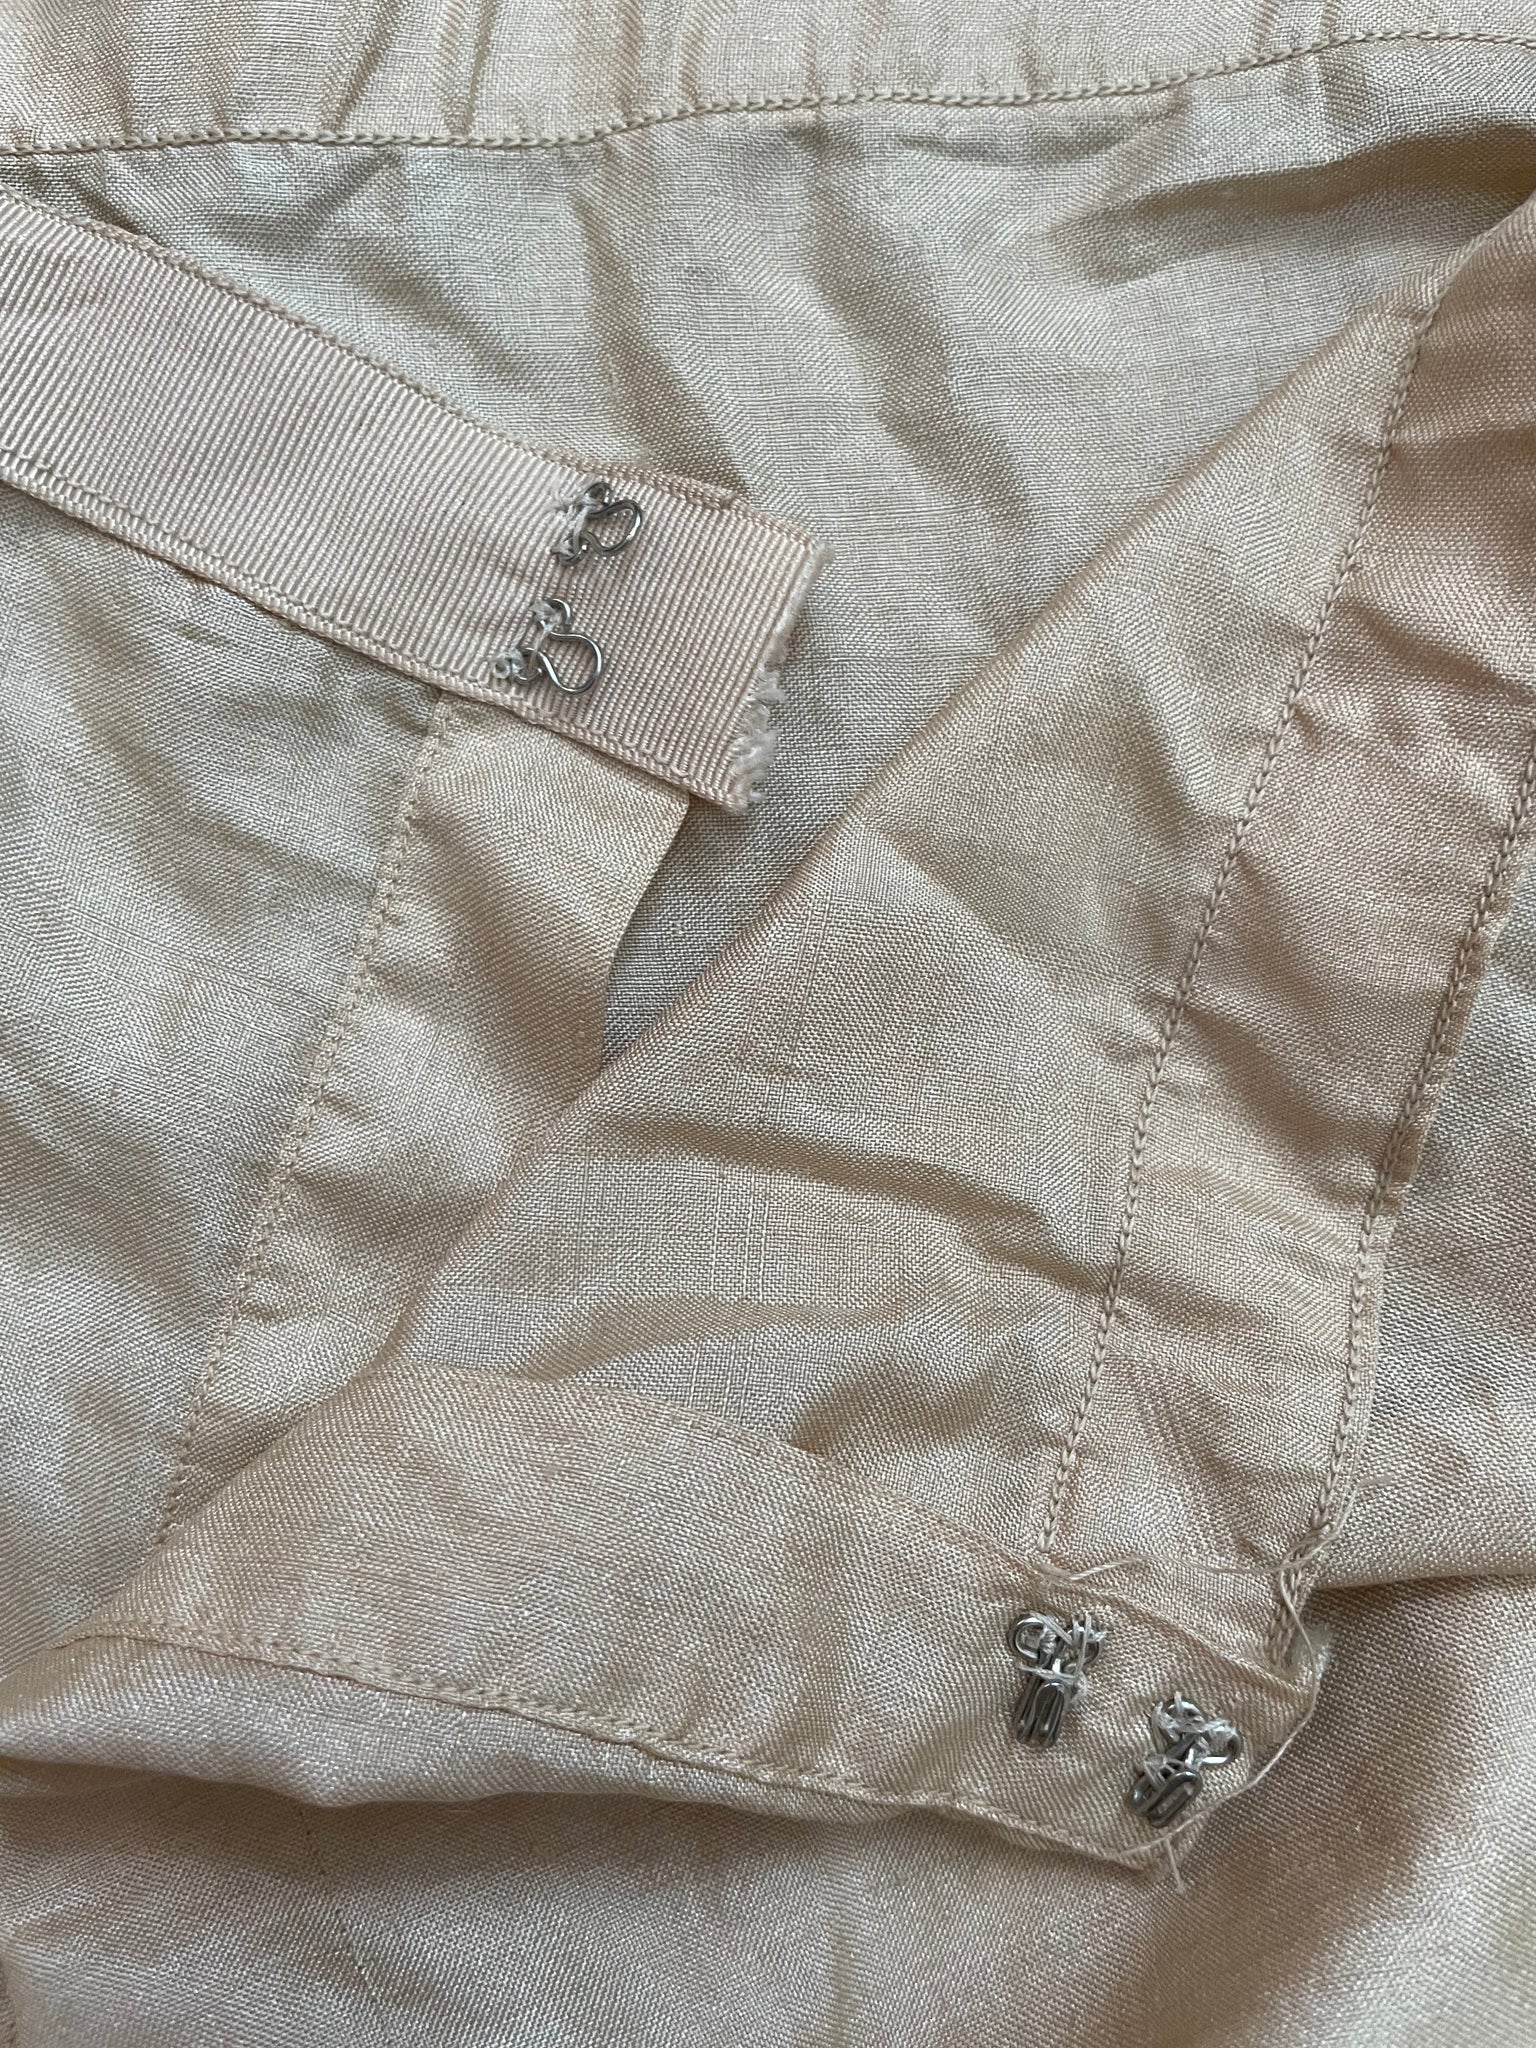 Antique Pongee Silk Skirt – Of the Palms